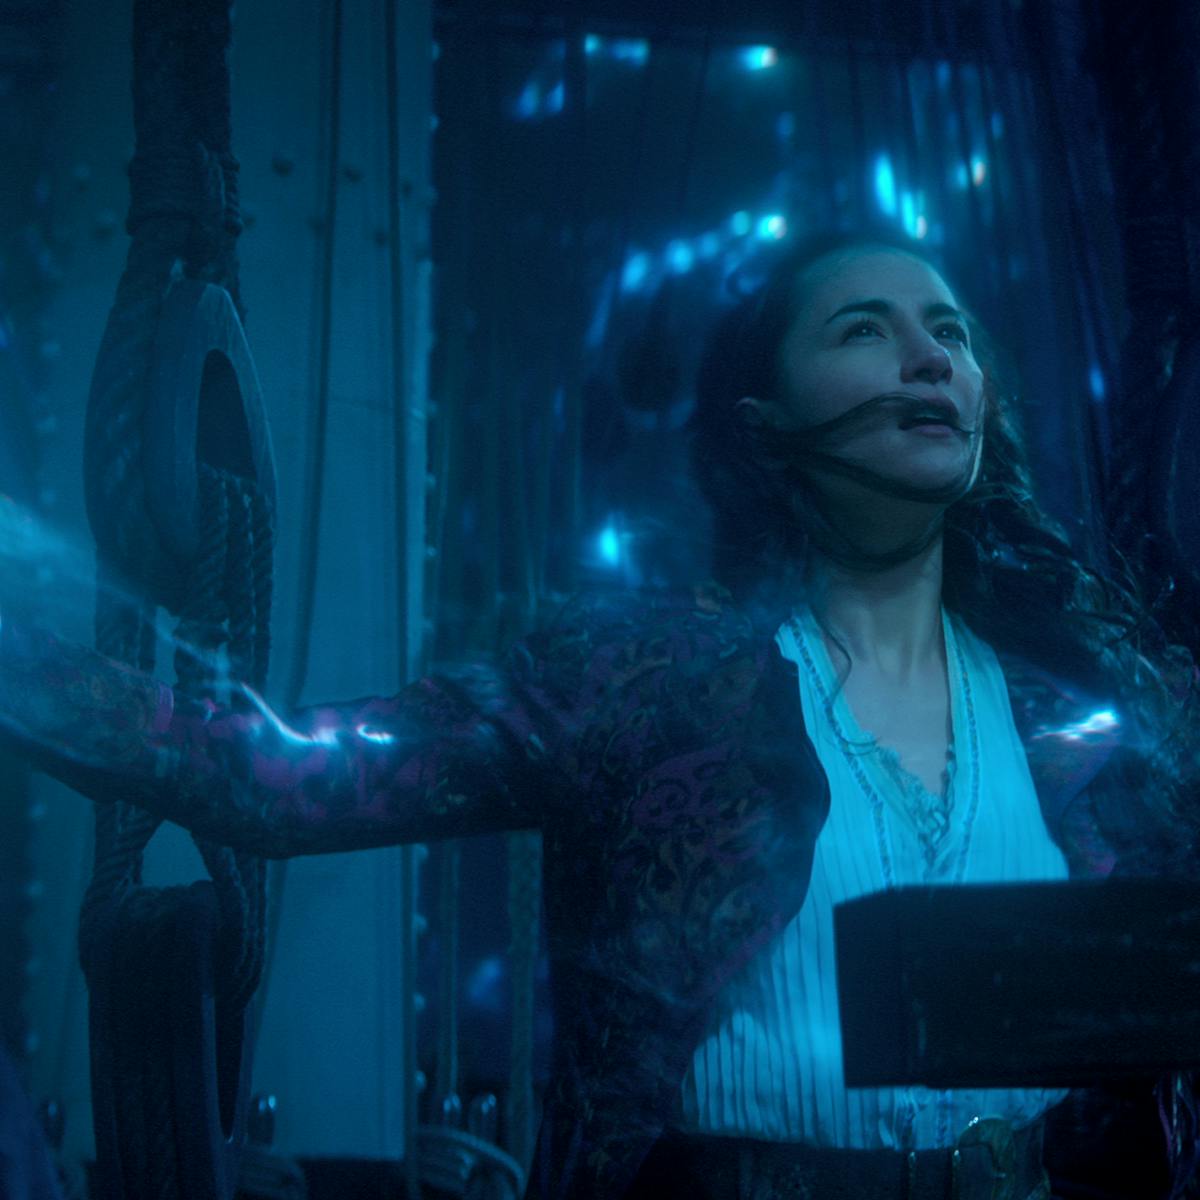 Alina Starkov (Jessie Mei Li) stands in a dark room surrounded by neon blue light. 